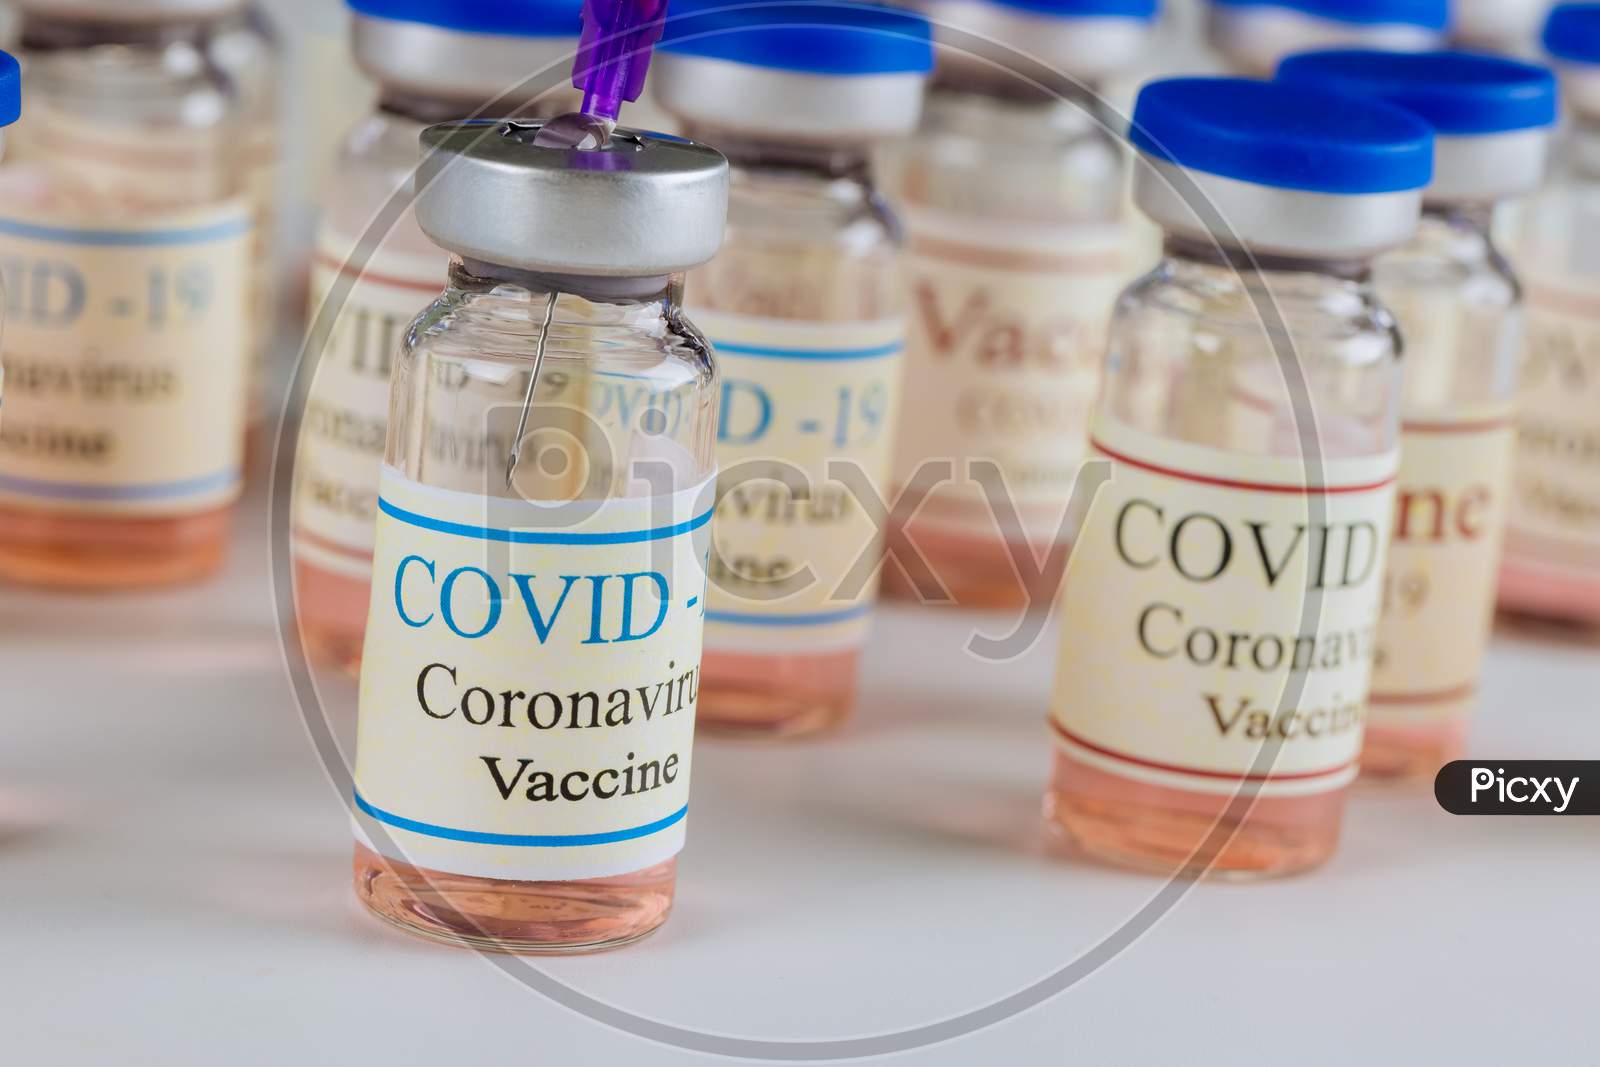 Covid-19 Coronavirus Vaccine Glass Vials With Vaccination Against 2019-Ncov Virus.